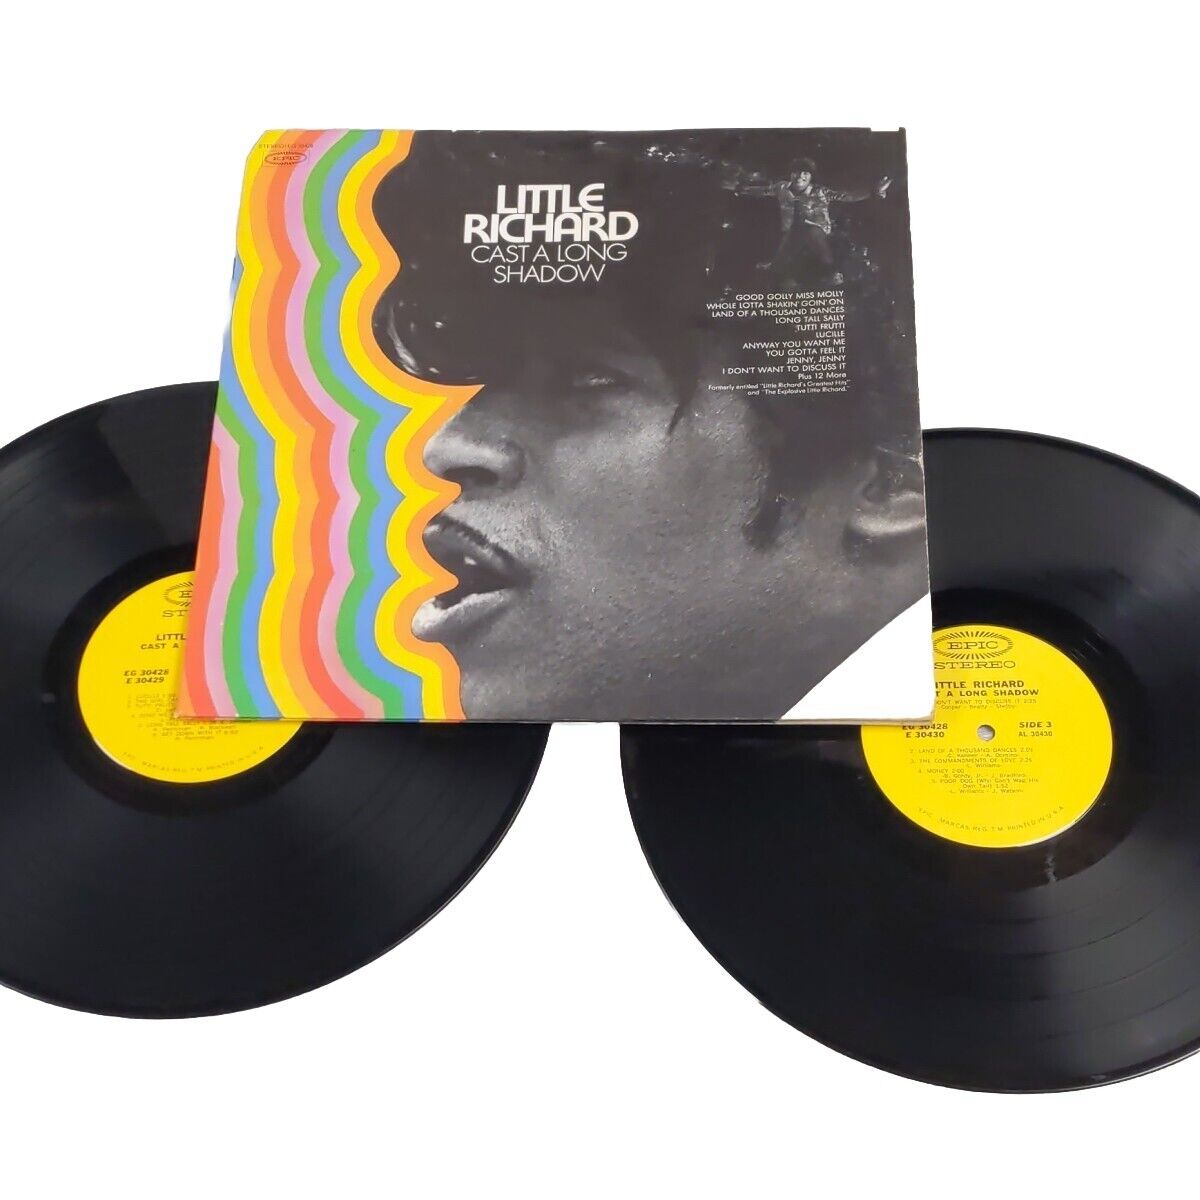 Vintage Little Richard - Cast a Long Shadow (2 Record Set) Gatefold